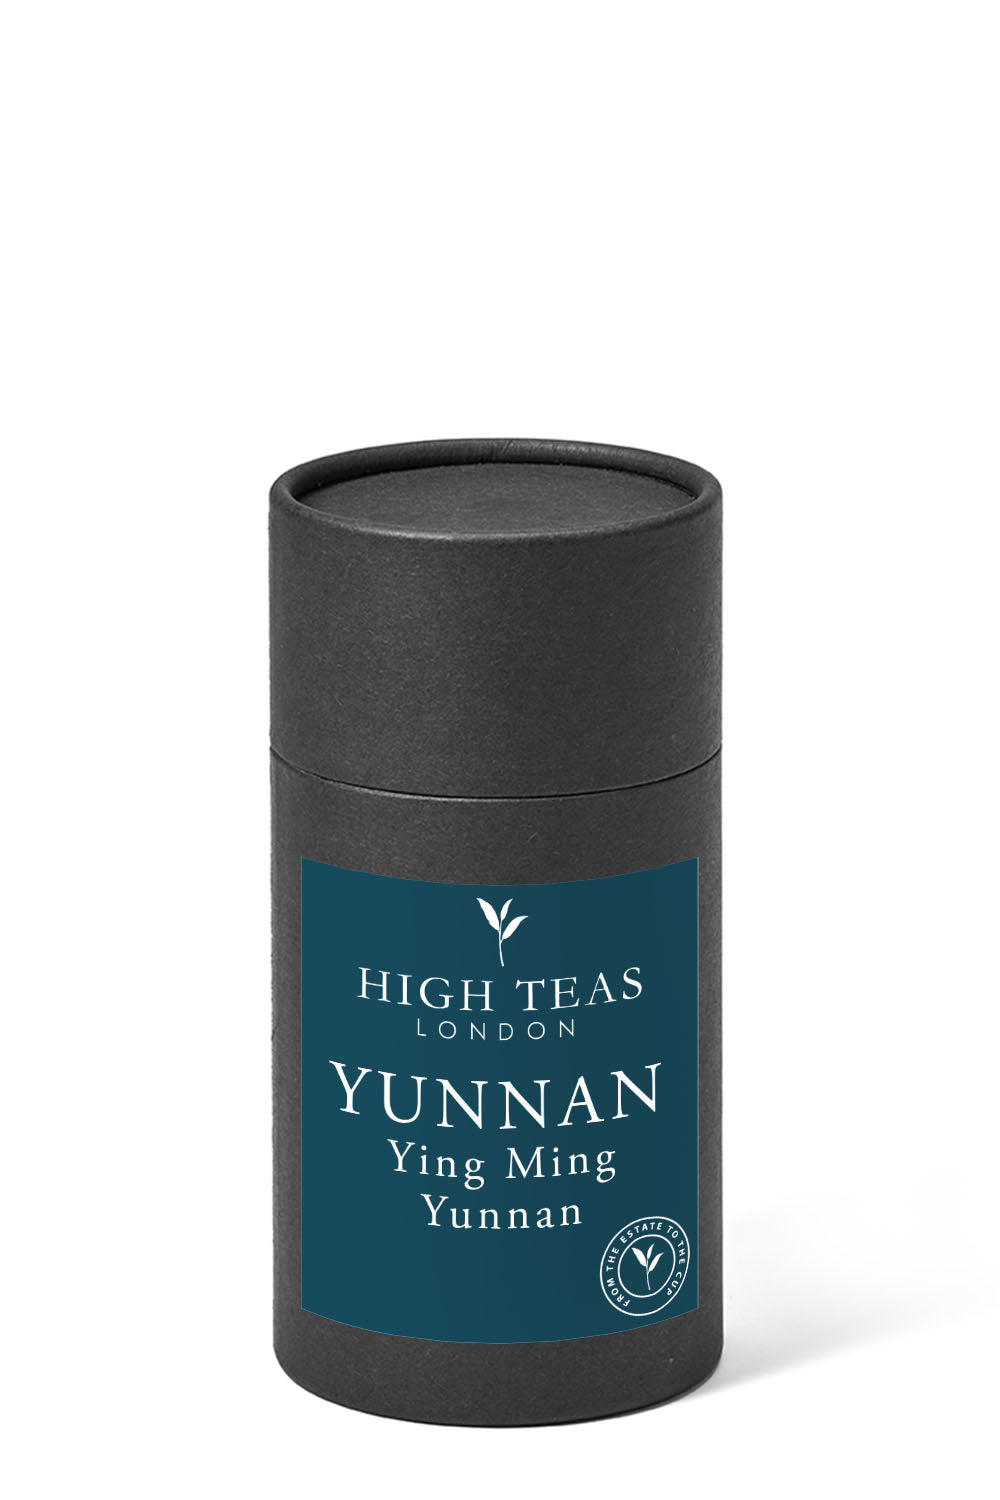 Ying Ming Yunnan-60g gift-Loose Leaf Tea-High Teas